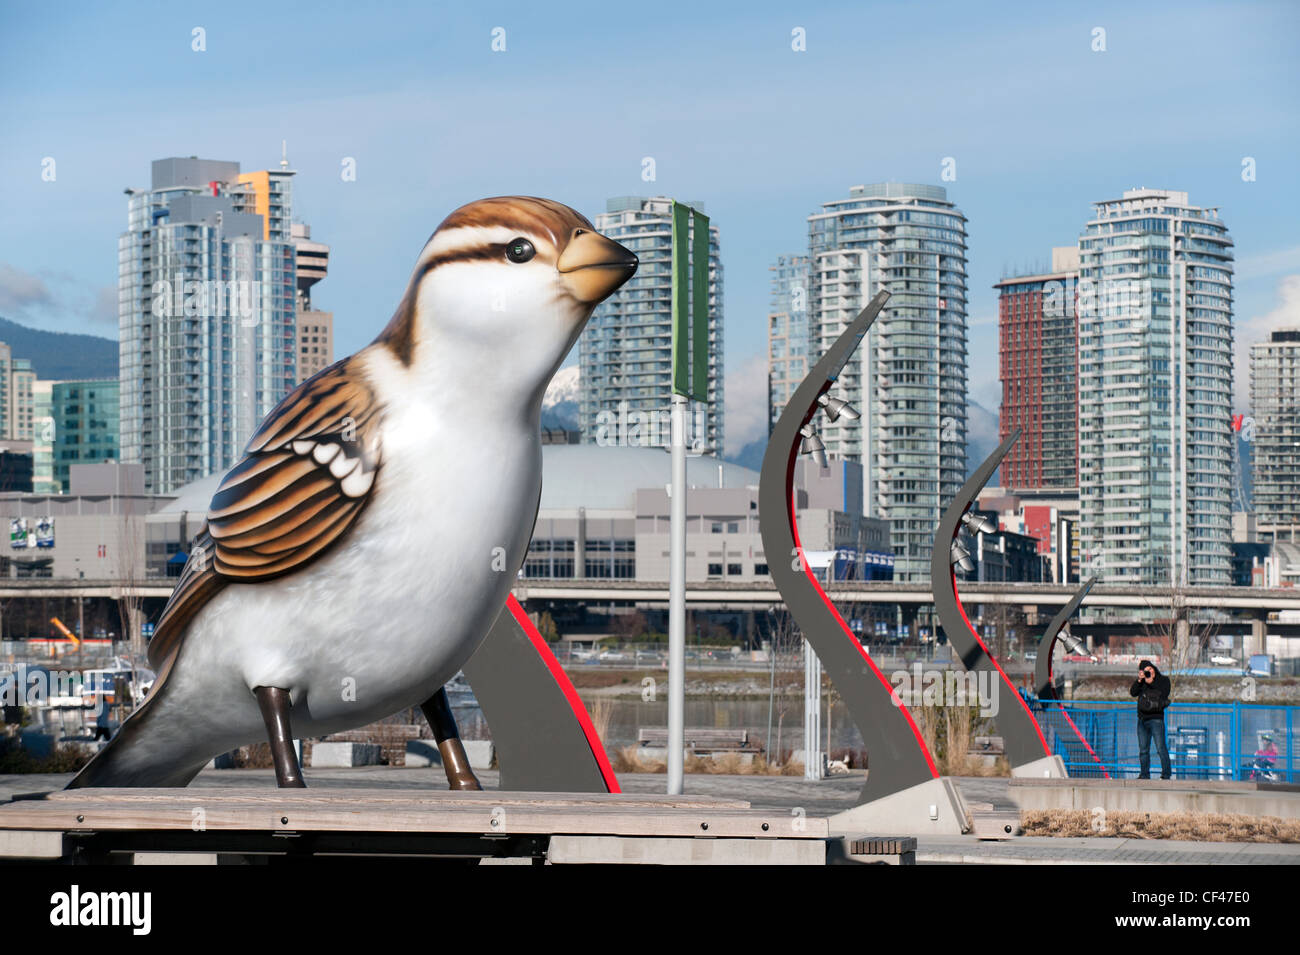 Big bird in the city Stock Photo